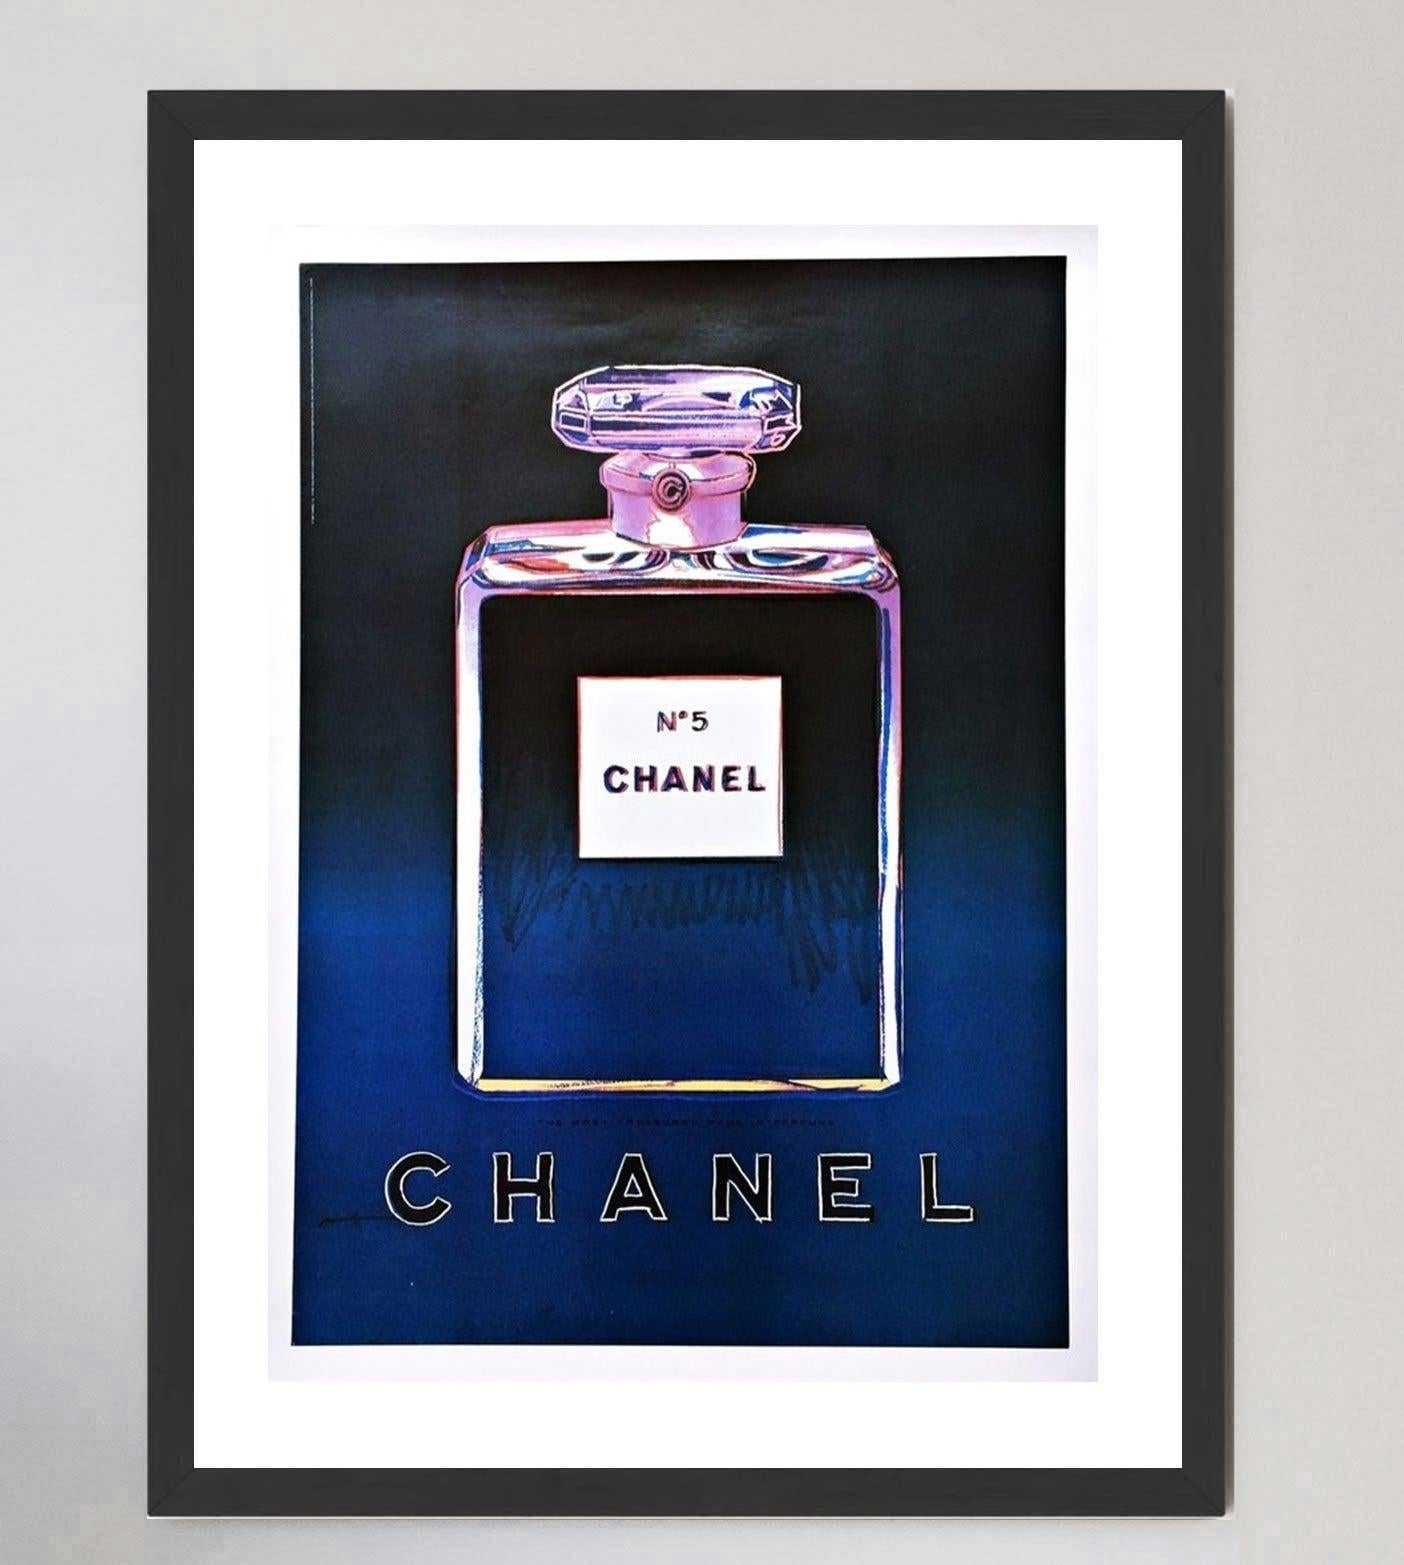 Linen 1997 Andy Warhol, Chanel Set of 4 Original Vintage Posters